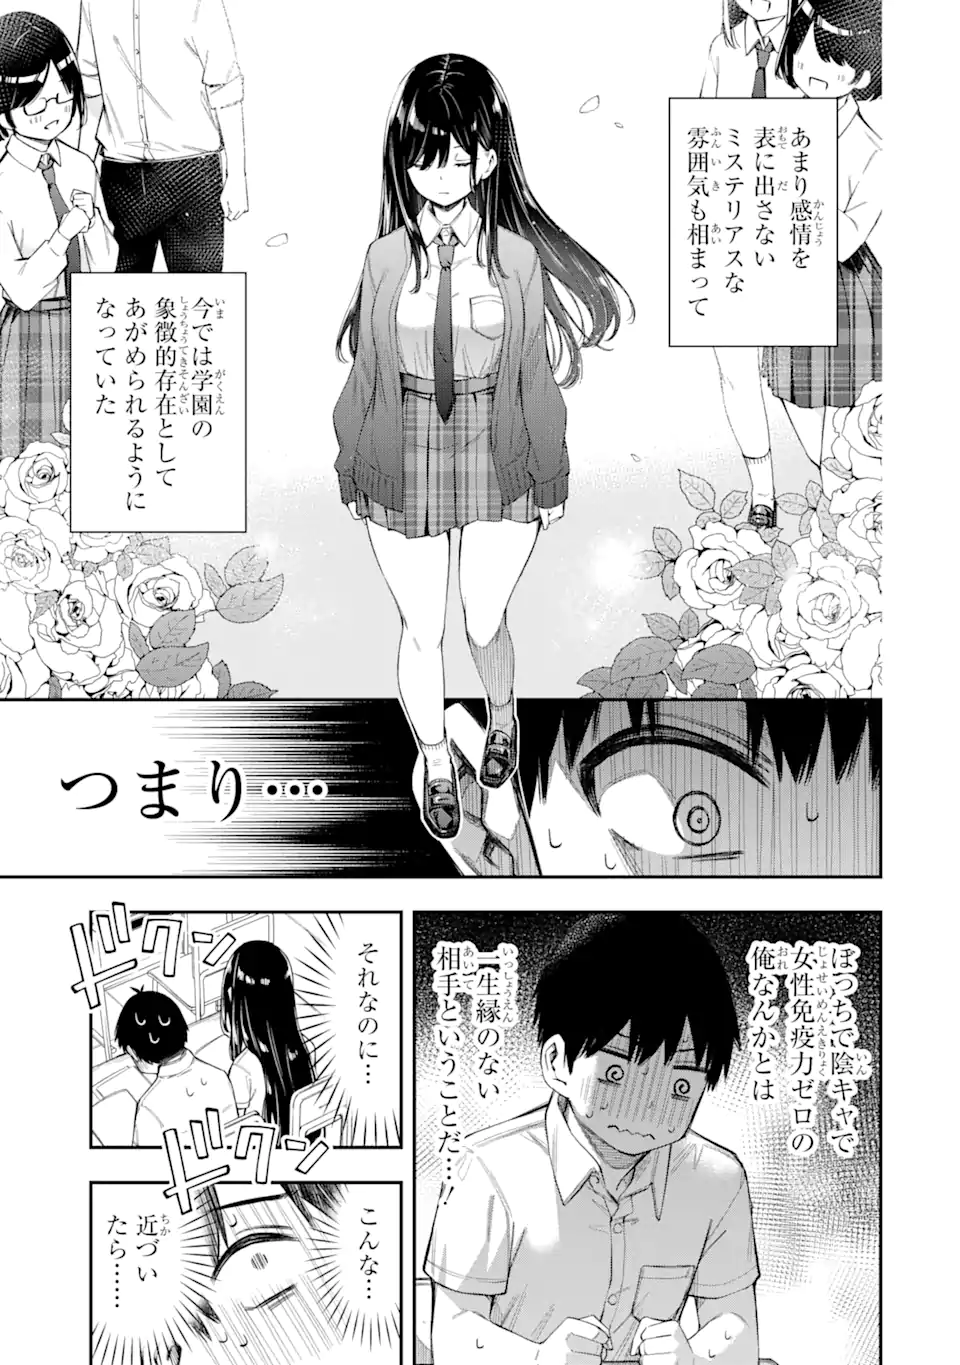 Renai no Jugyou - Chapter 1.1 - Page 11